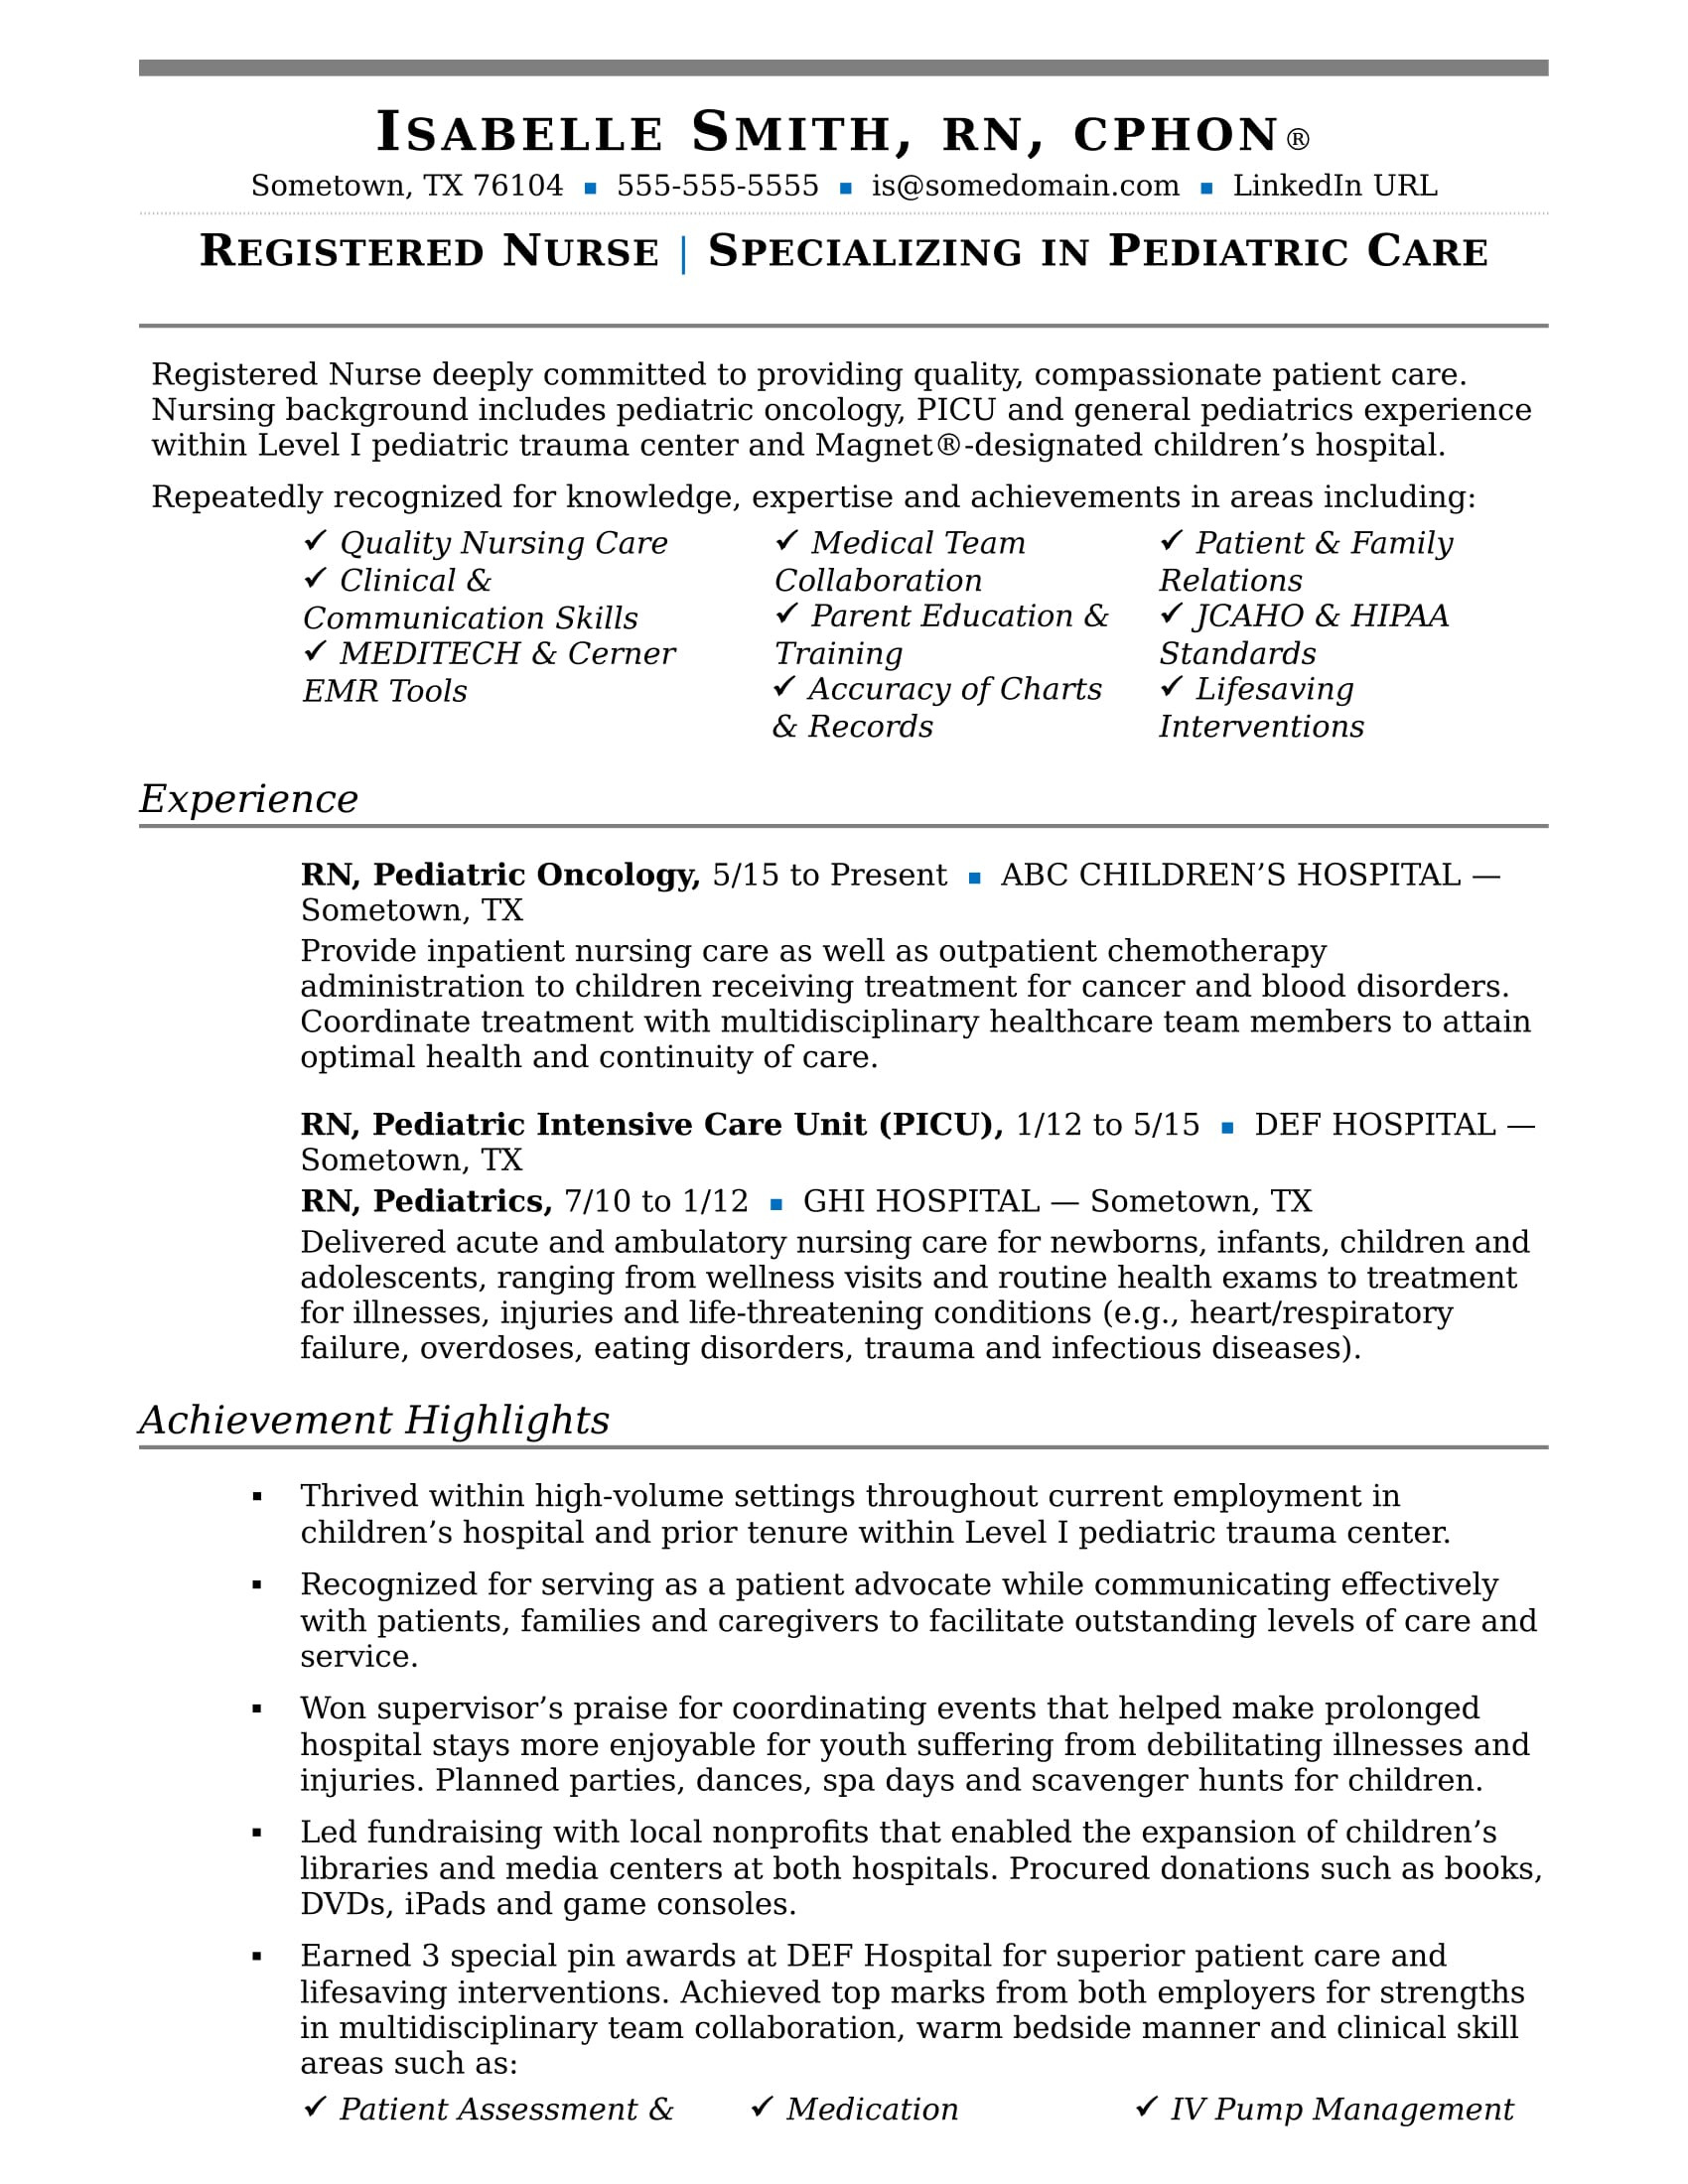 Sample Registered Nurse Resume without Experience Nurse Resume Sample Monster.com